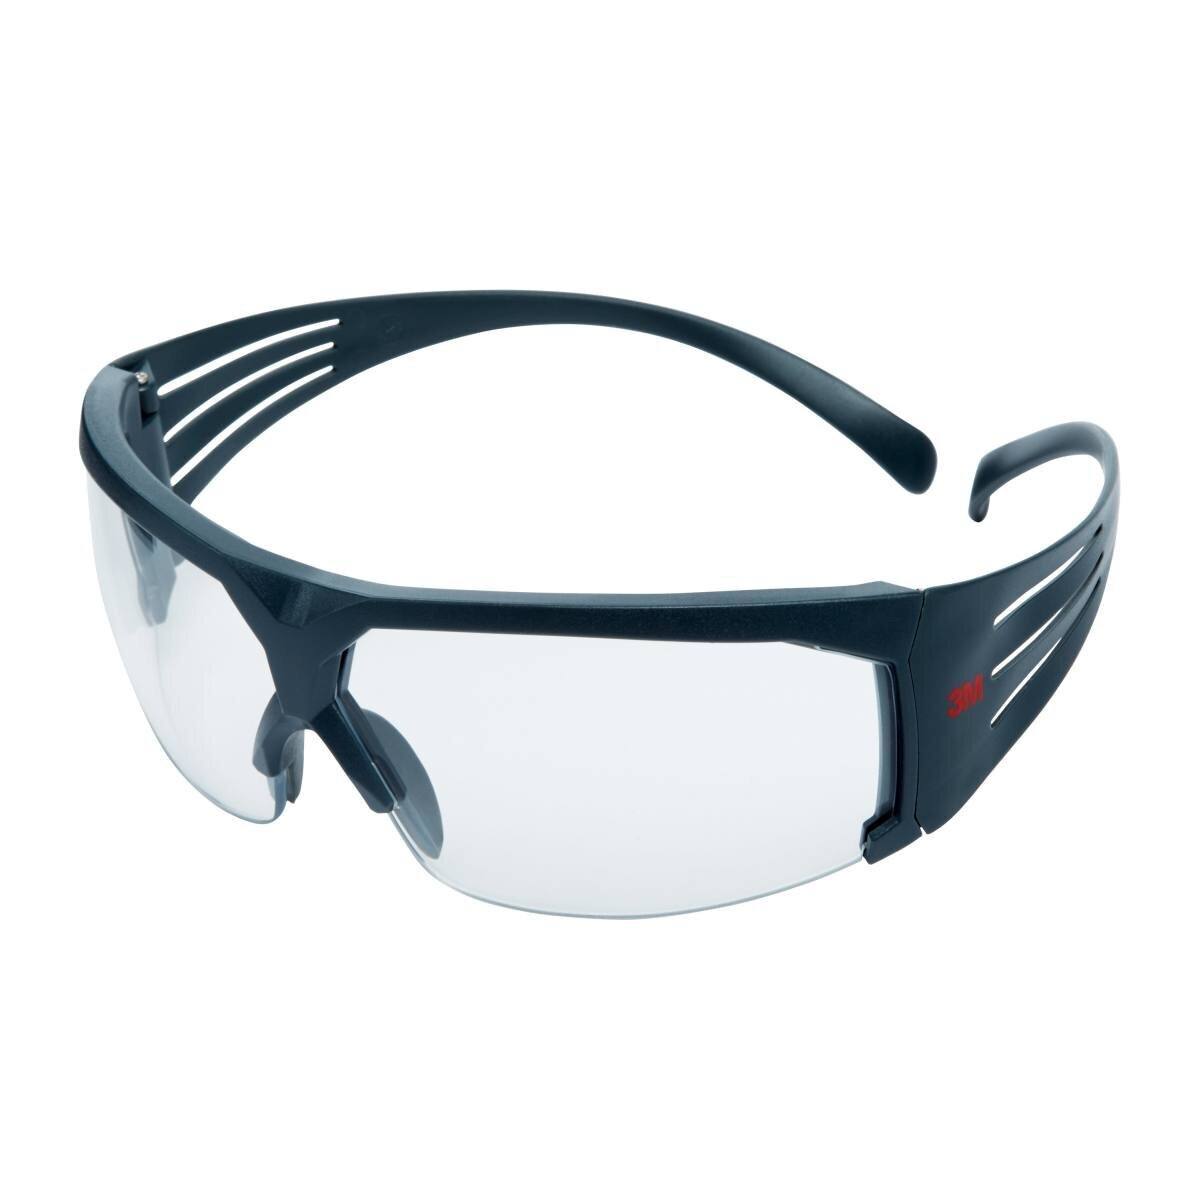 3M SecureFit 600 Schutzbrille, graue Bügel, robuste Antikratz-Beschichtung (K), transparente Scheibe, SF601RAS-EU